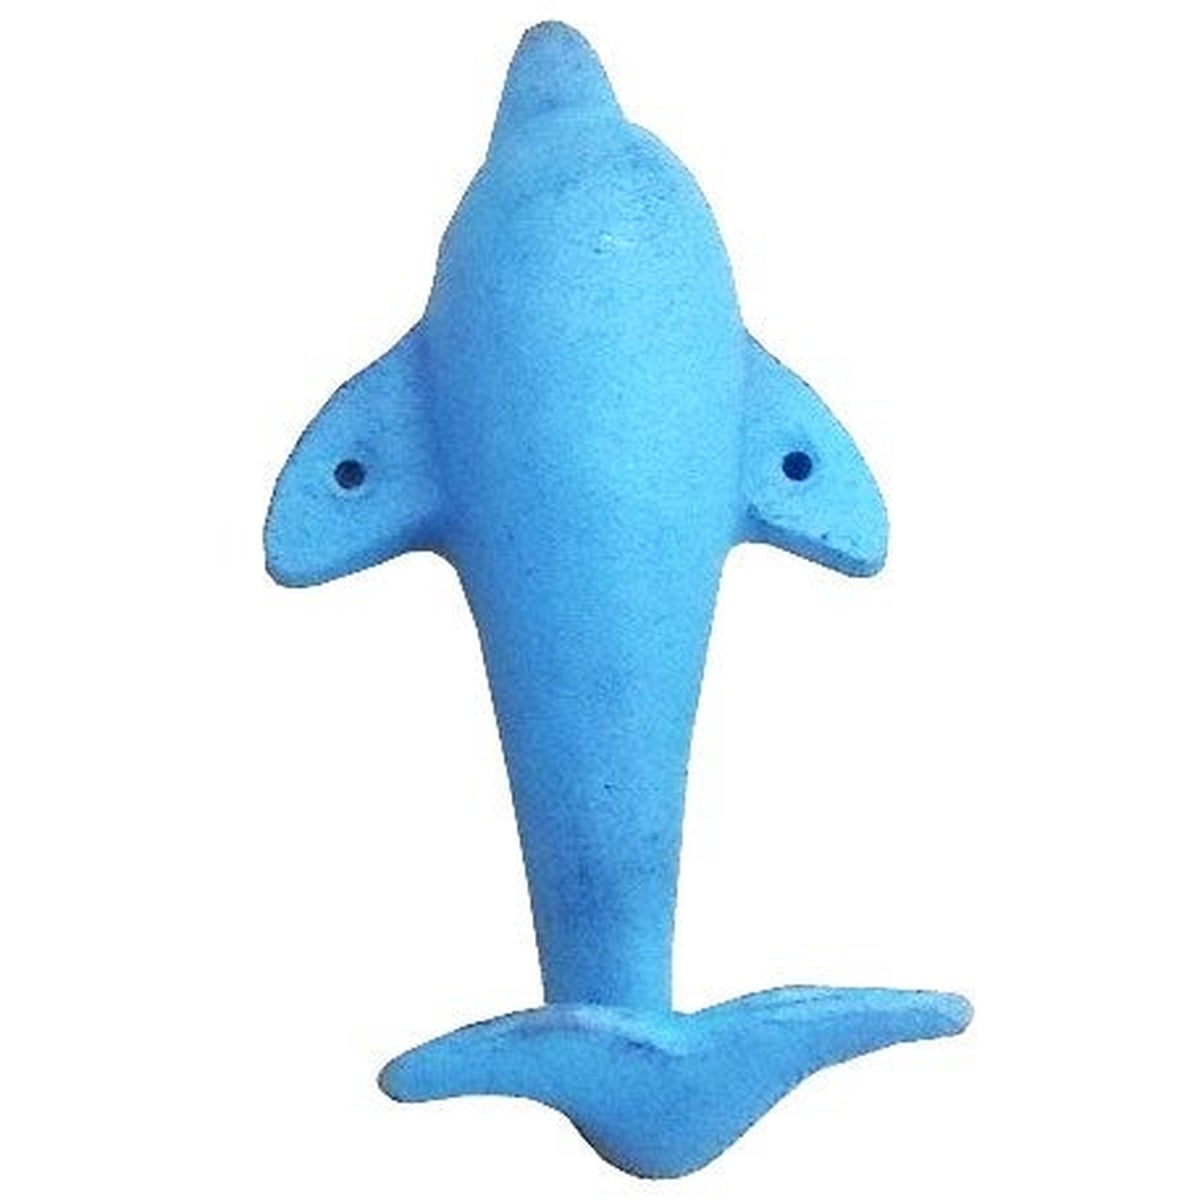 "Dolphin Hook Single Blue Cast, Last Chance"